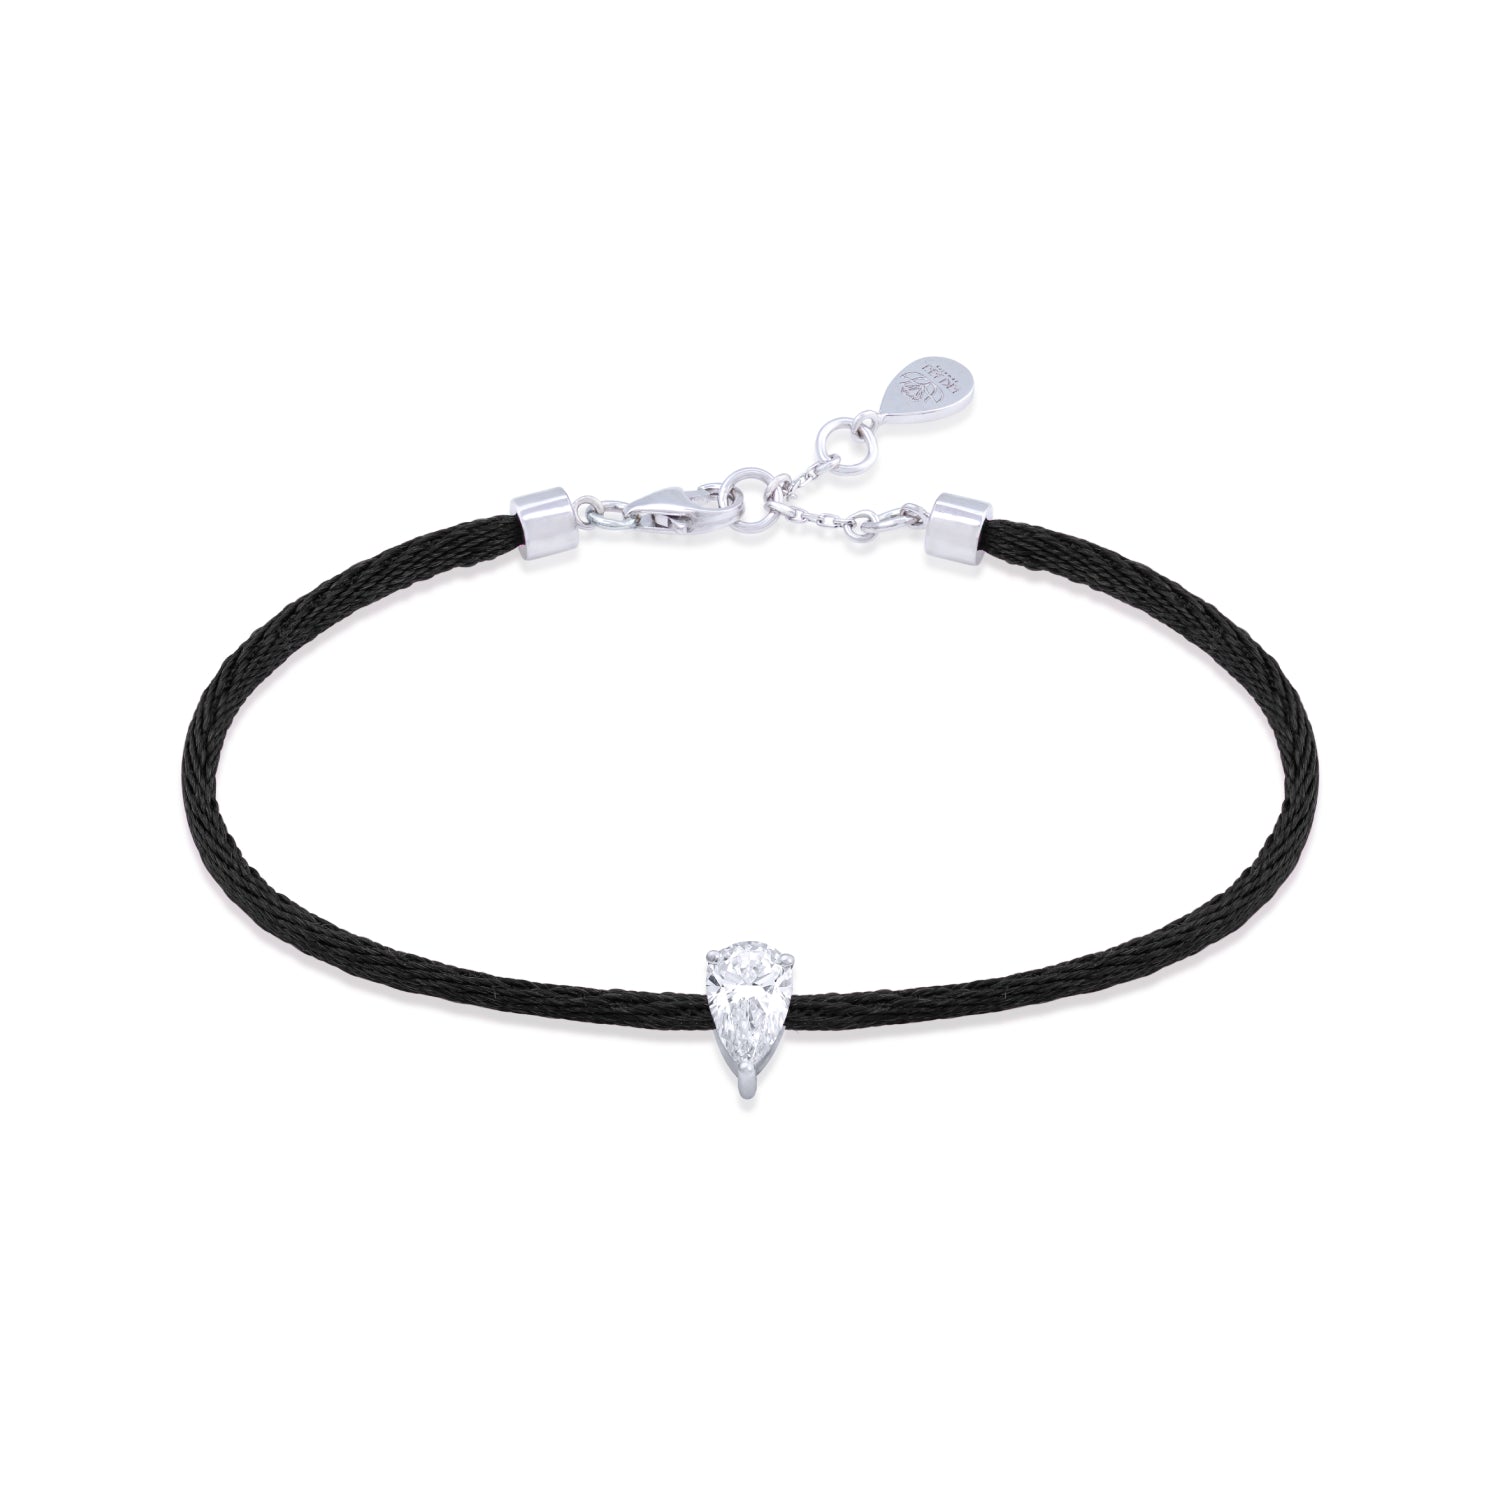 Solitaire Pear Cut Diamond Black Cord Bracelet in White Gold